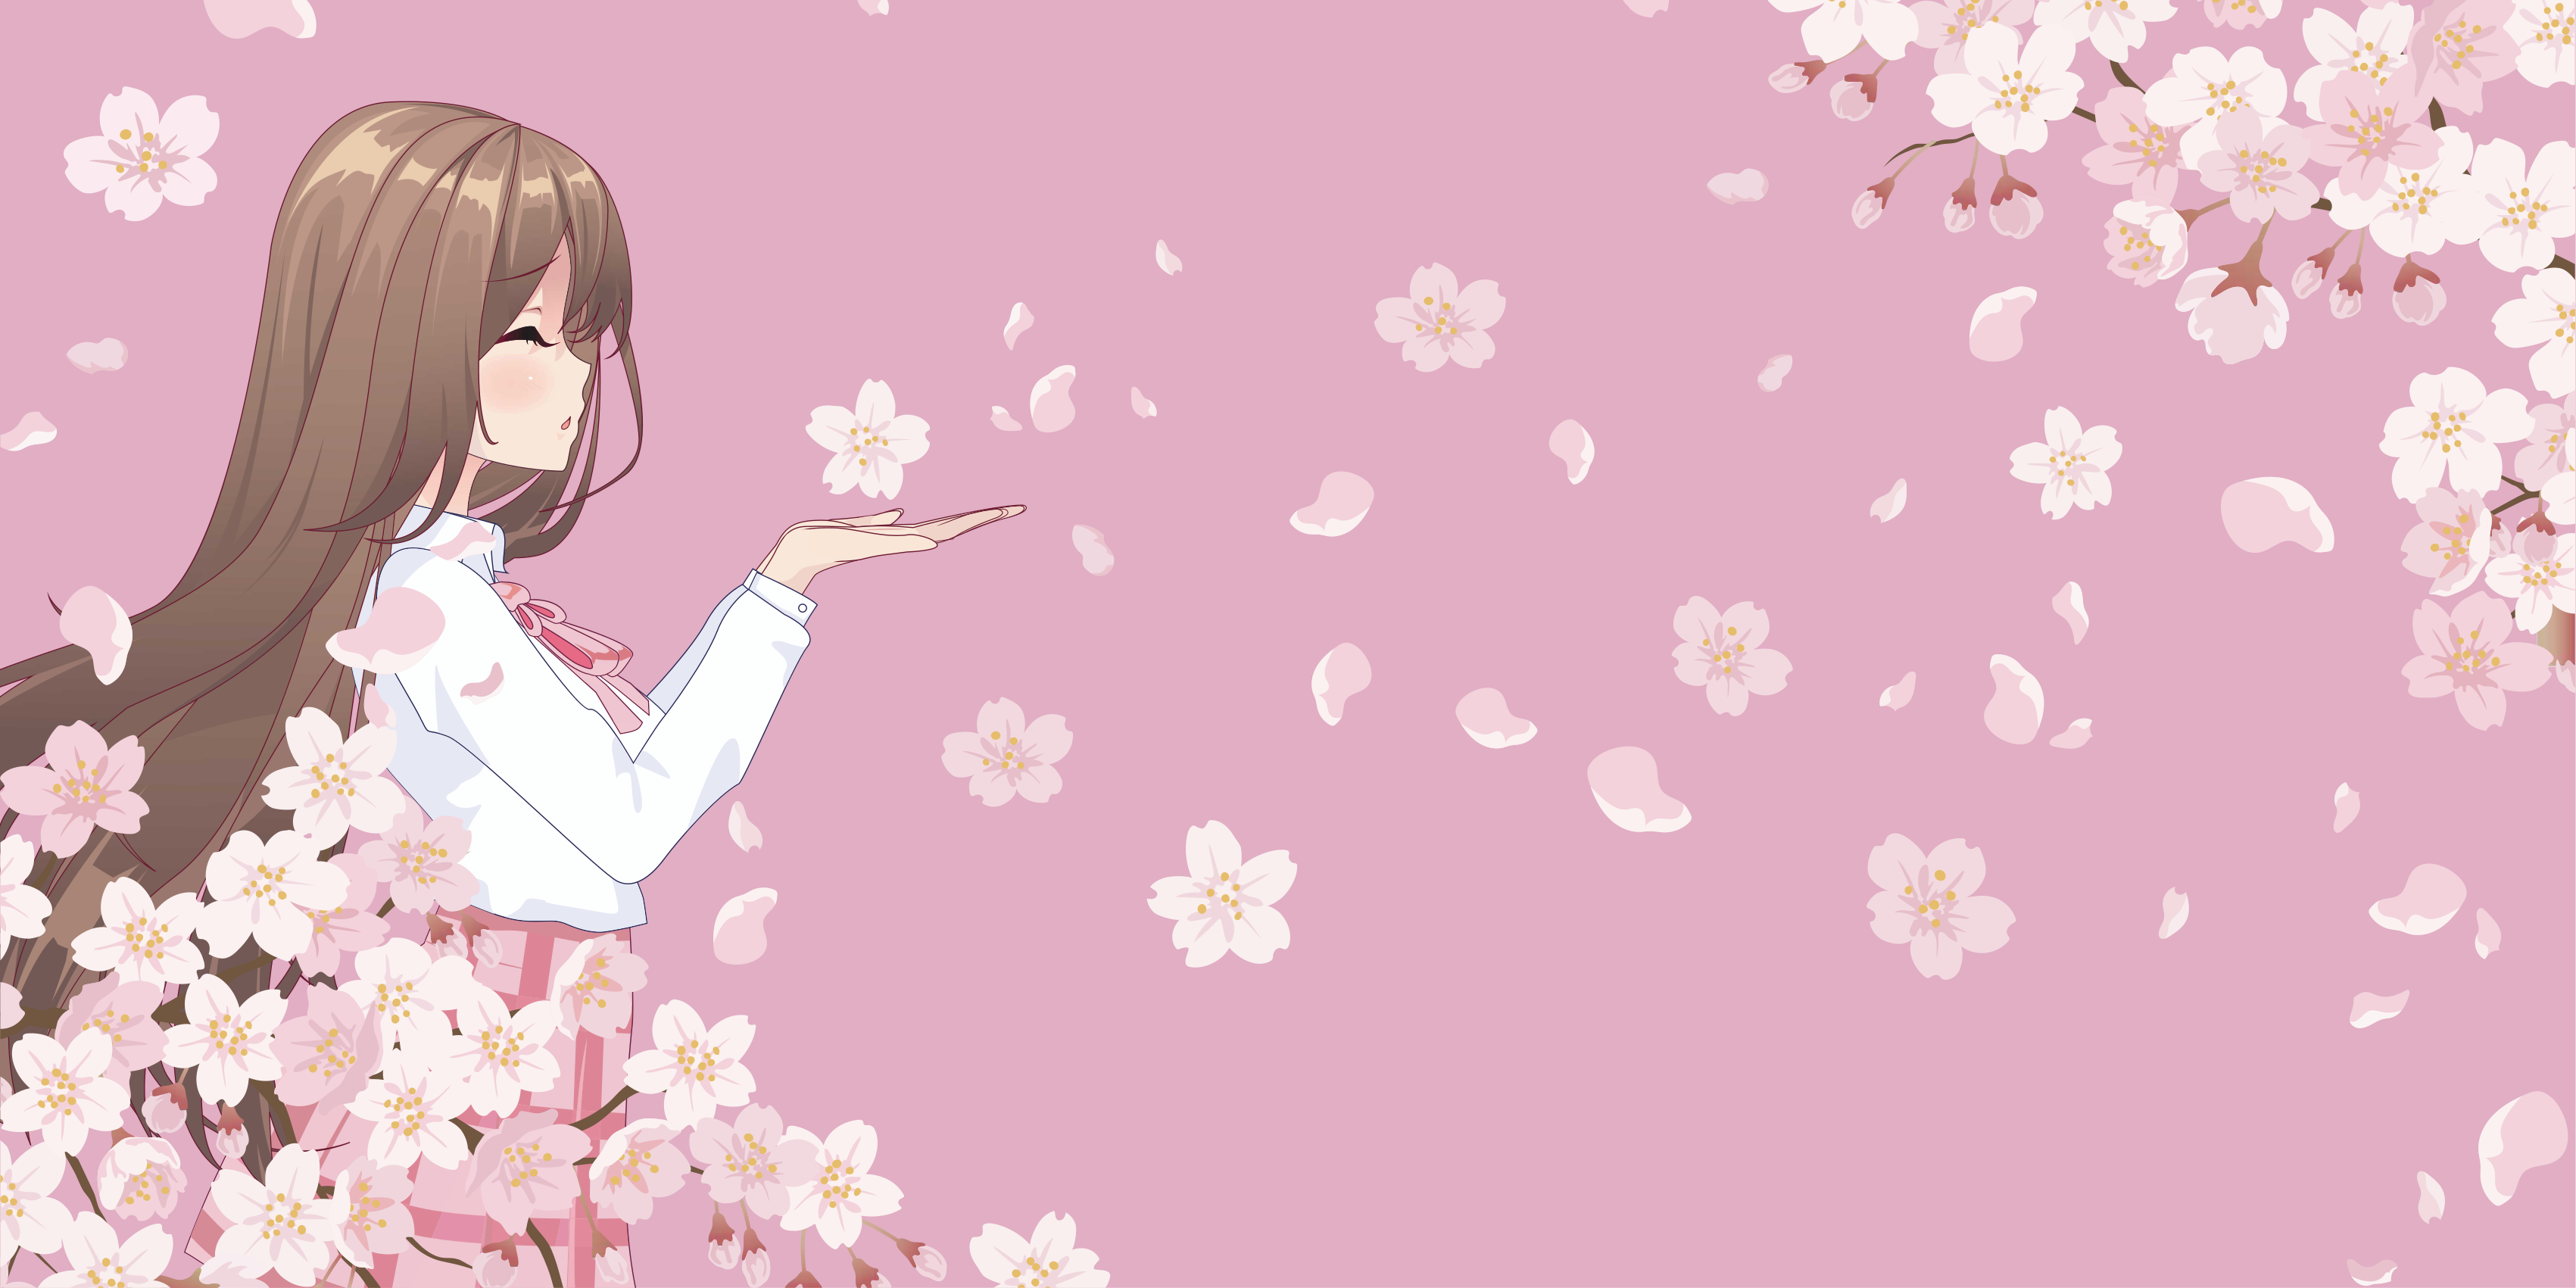 Wallpaper girl sakura flowers anime art pink hd picture image